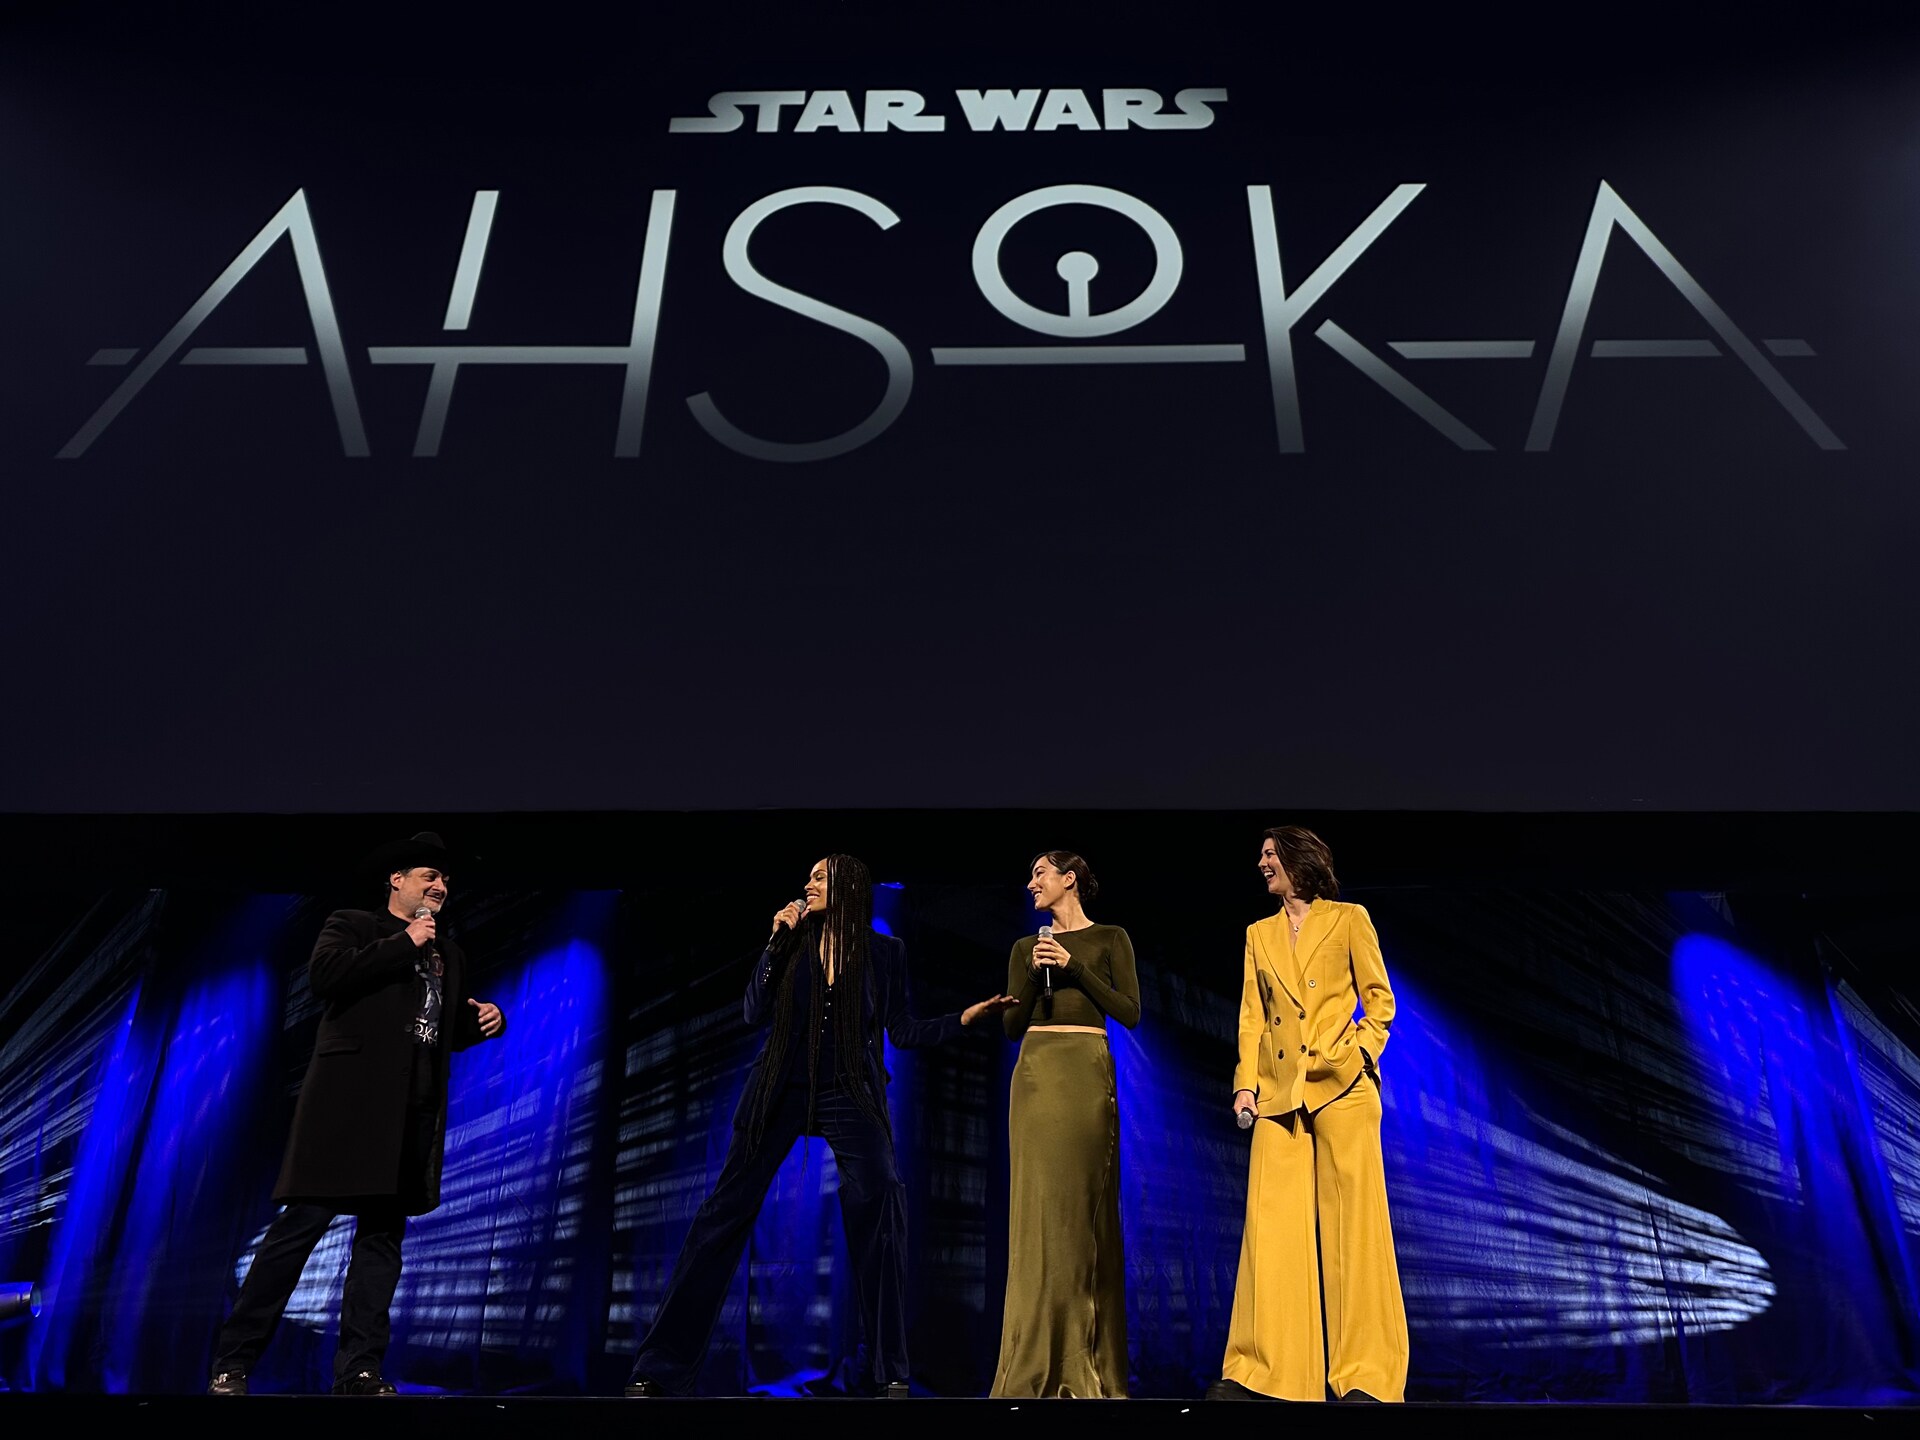 Natasha Liu Bordizzo and Mary Elizabeth Winstead join Rosario Dawson on stage for Ahsoka!